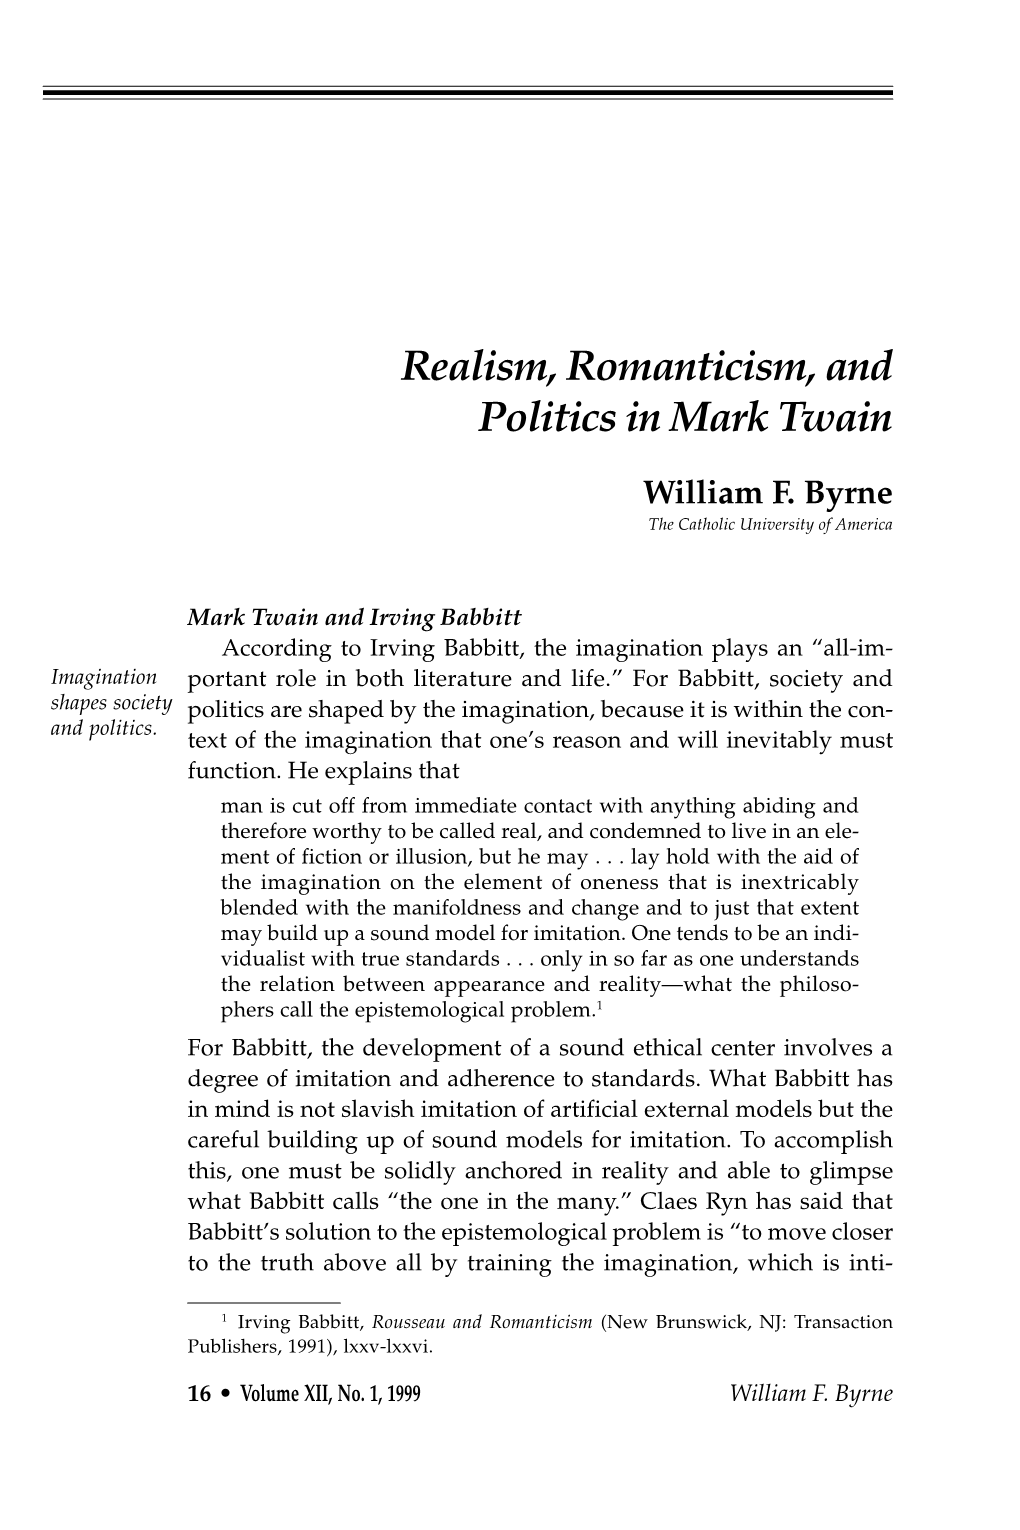 Realism, Romanticism, and Politics in Mark Twain